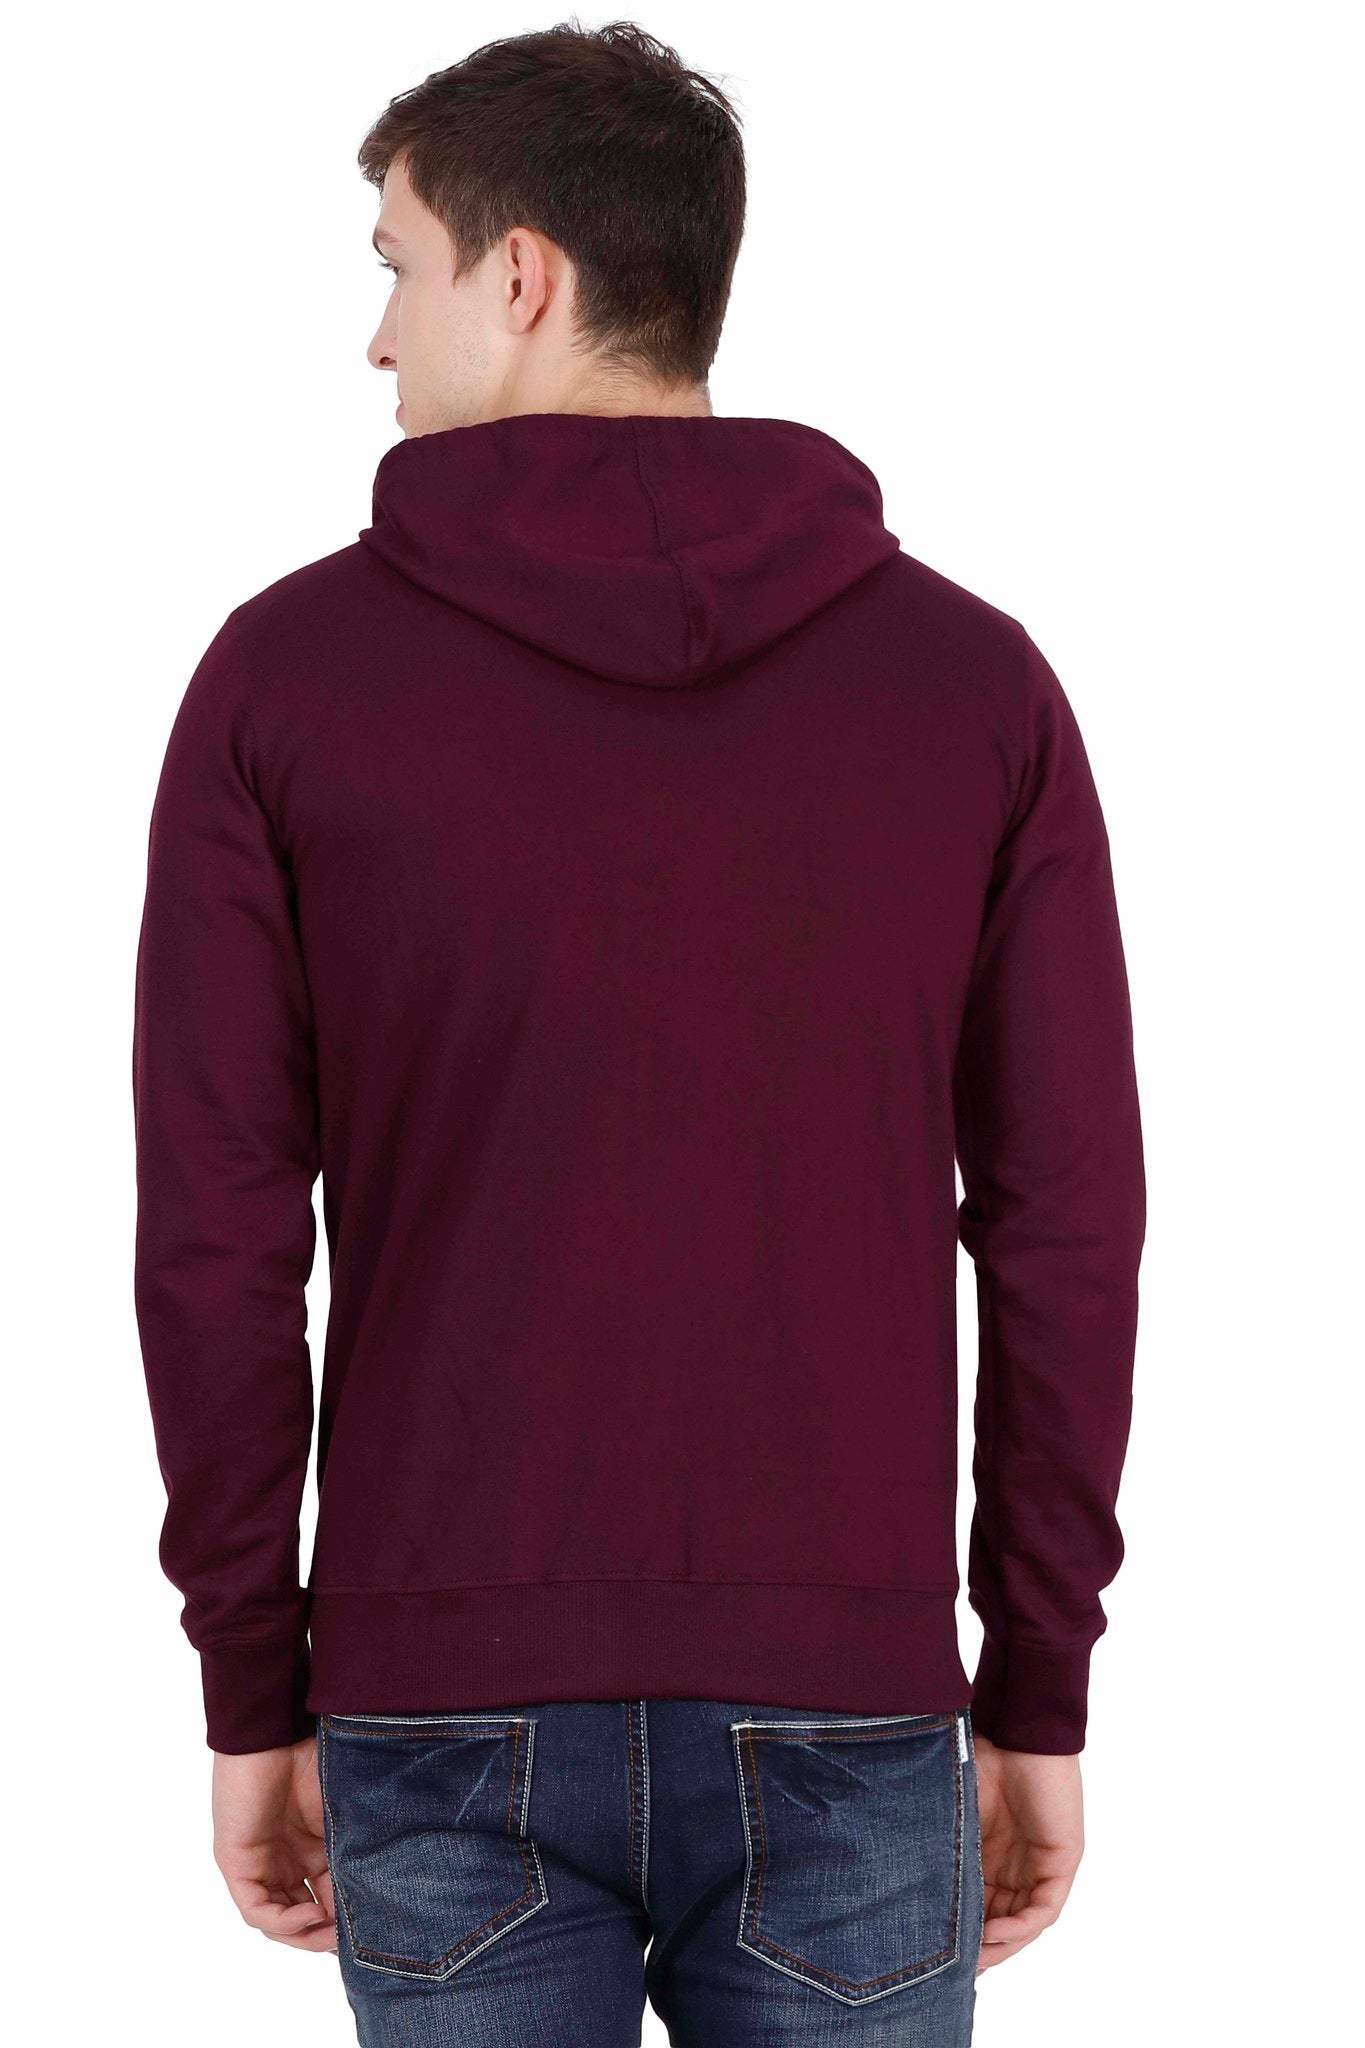 Men's Cotton Plain Full Sleeve Maroon Color Sweatshirt/Hoodies